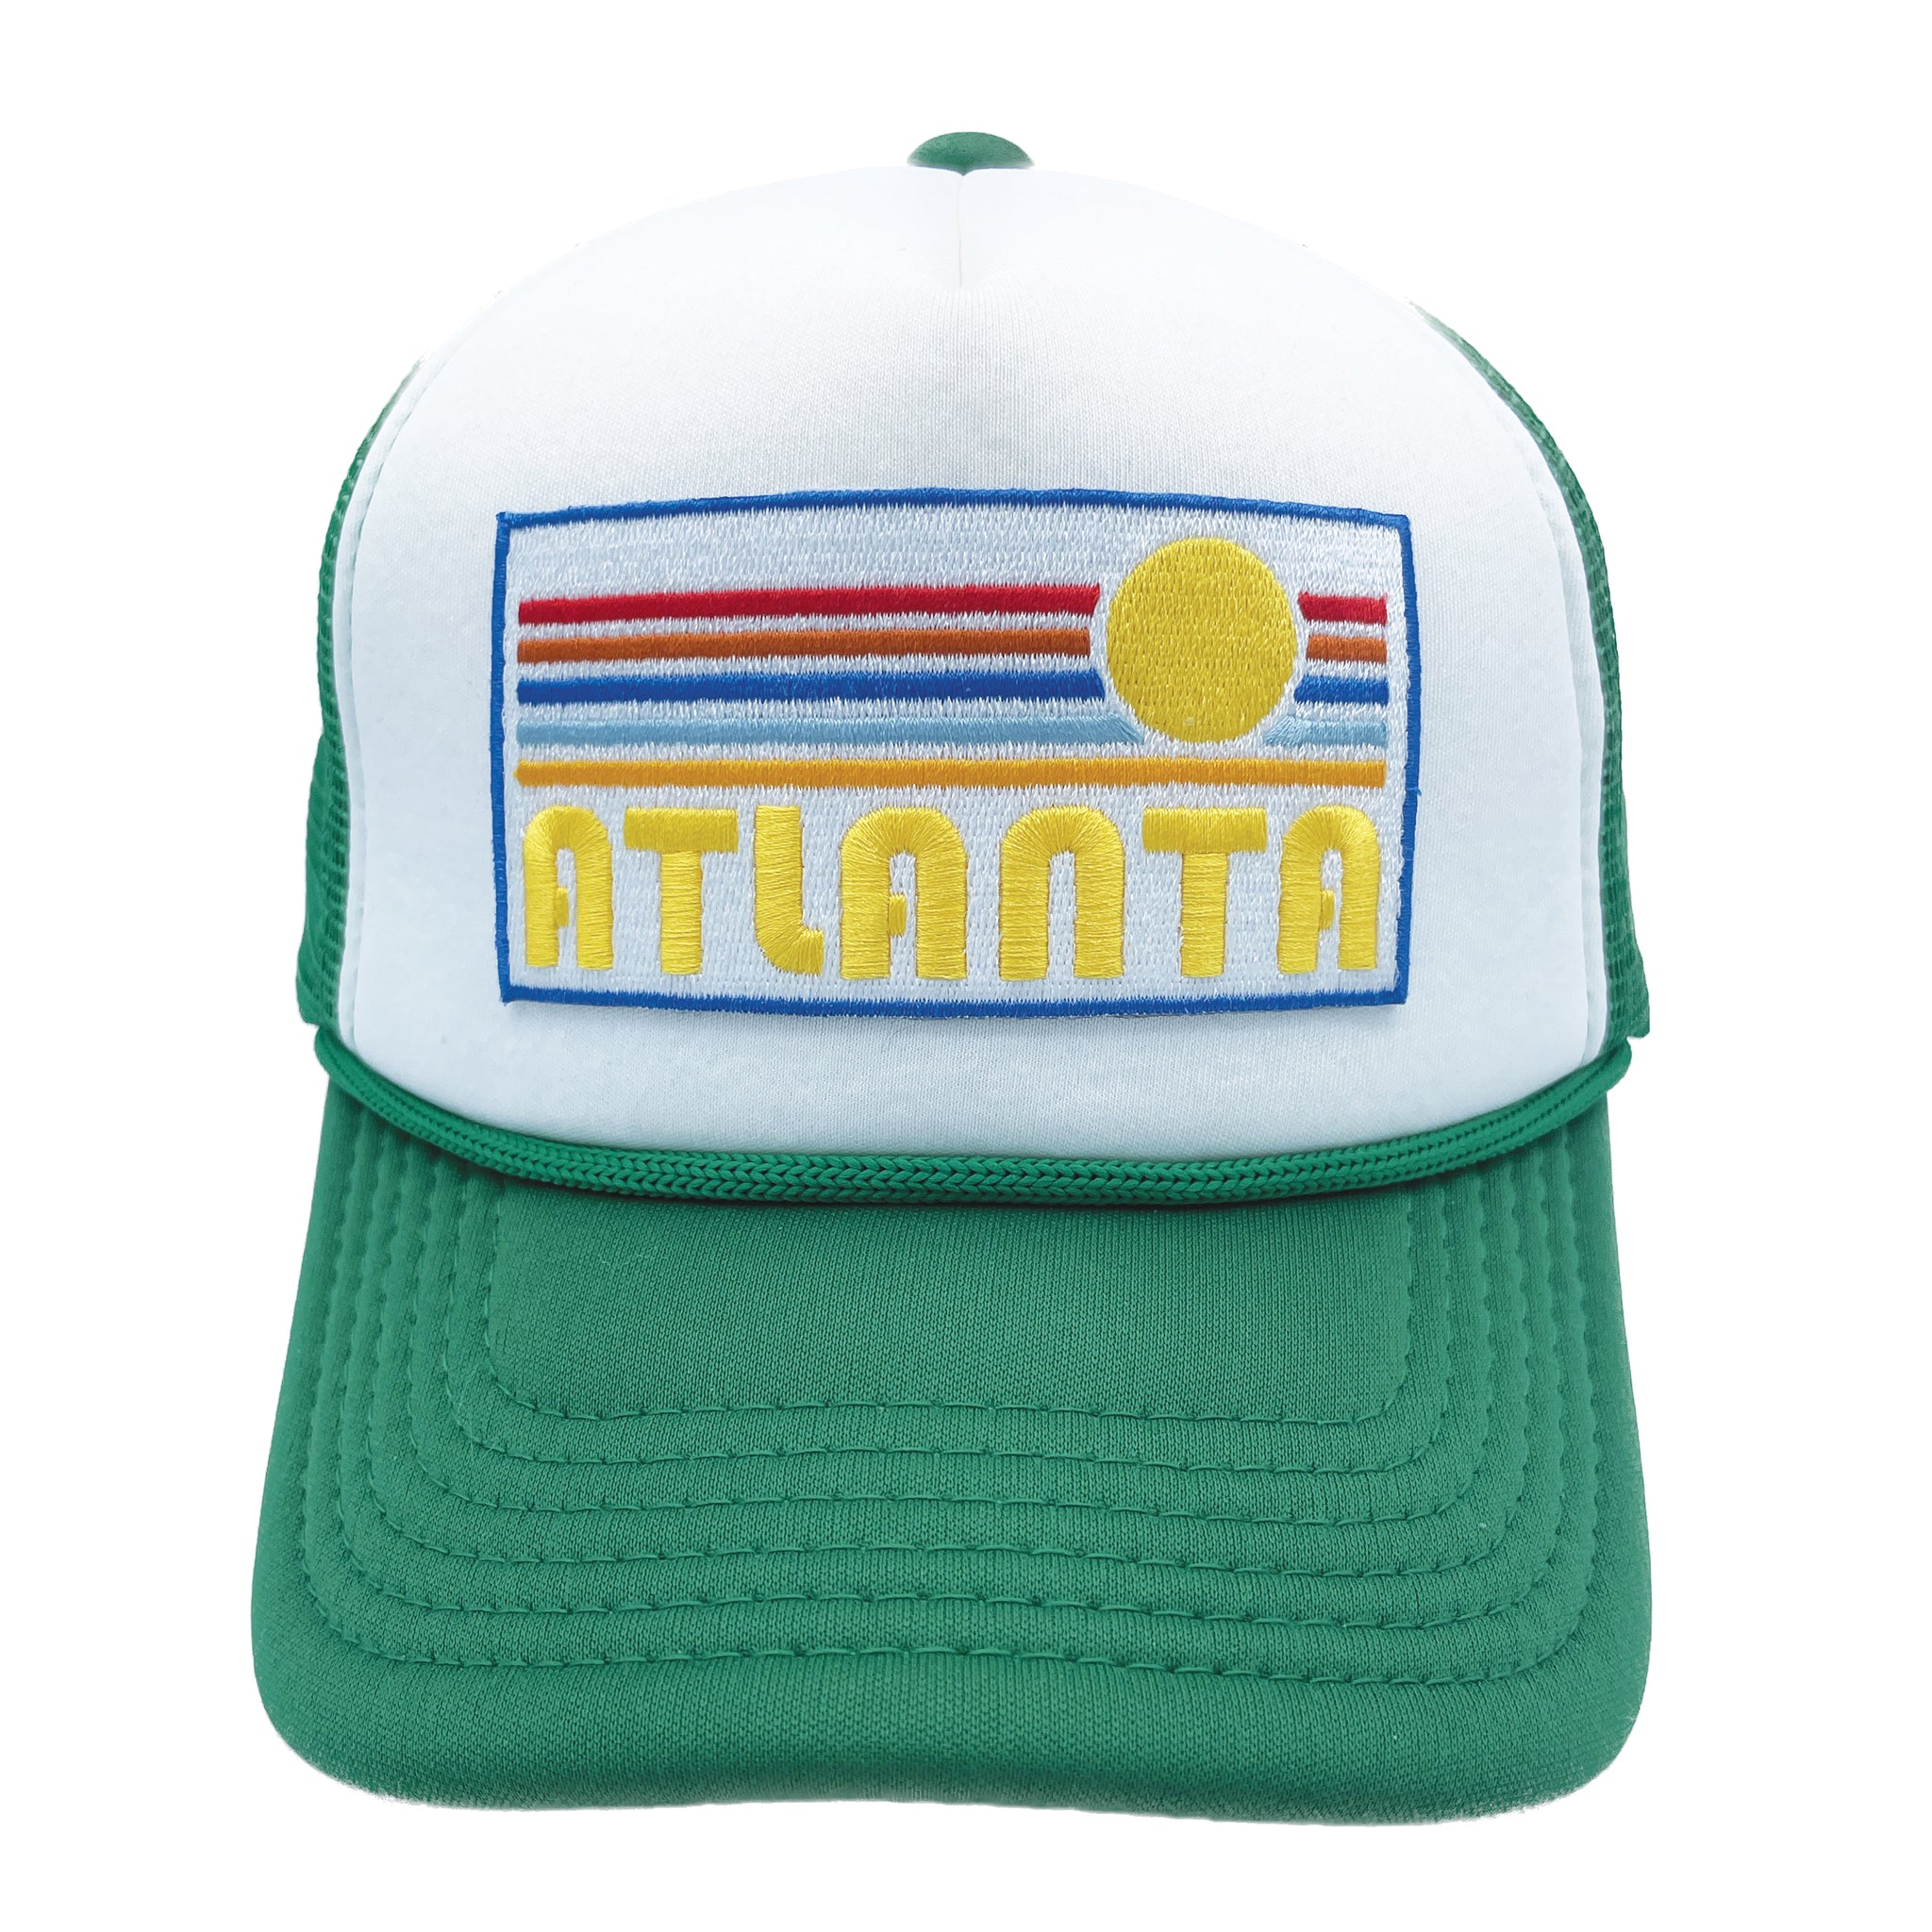 Kid's Atlanta, Georgia Hat (Ages 2-12) - Retro Sunrise Atlanta Snapbac